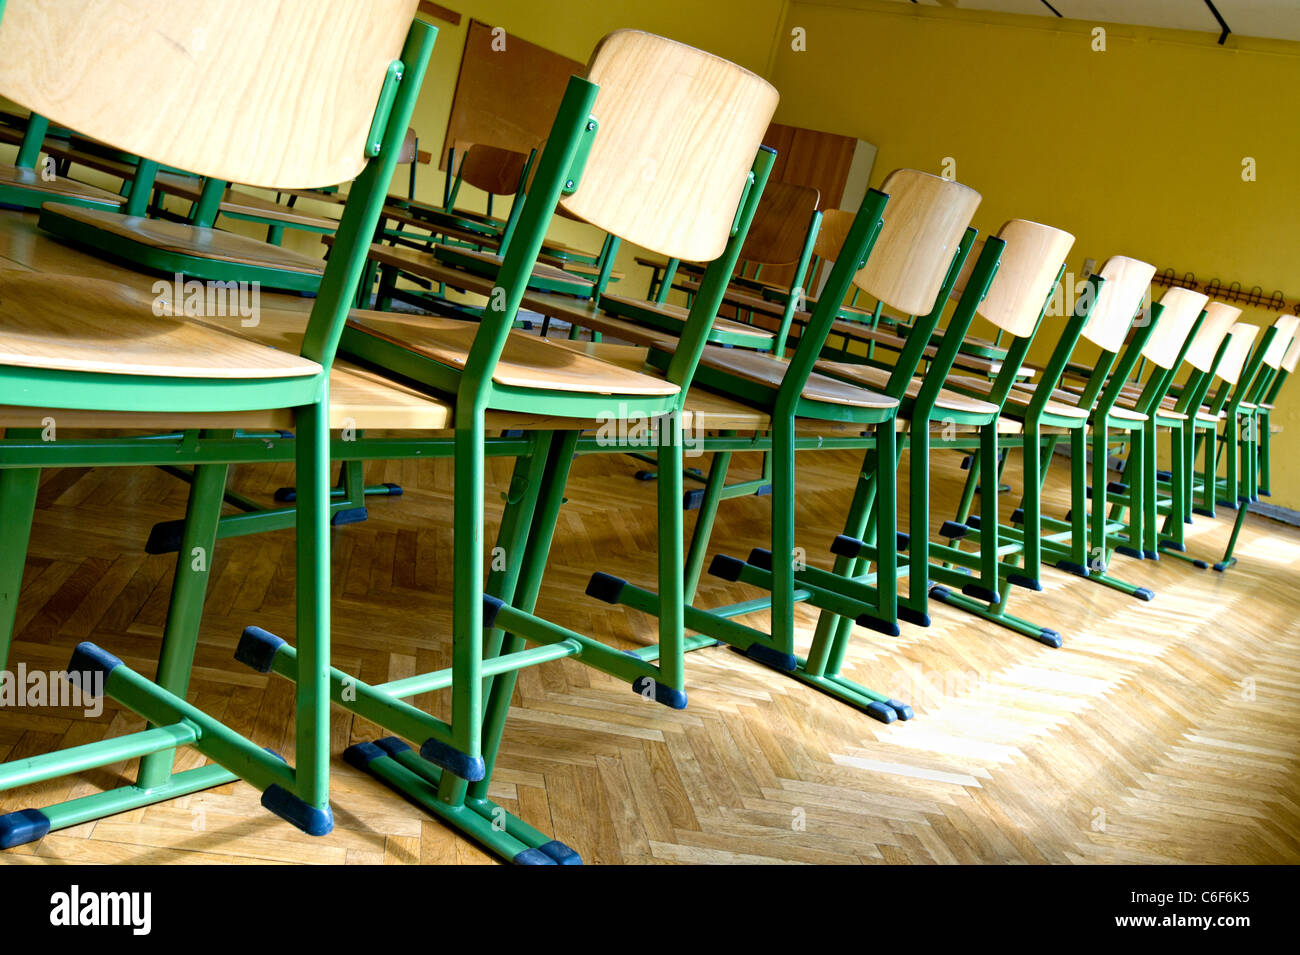 Klassenzimmer ohne Schüler; aulas sin alumnos Foto de stock